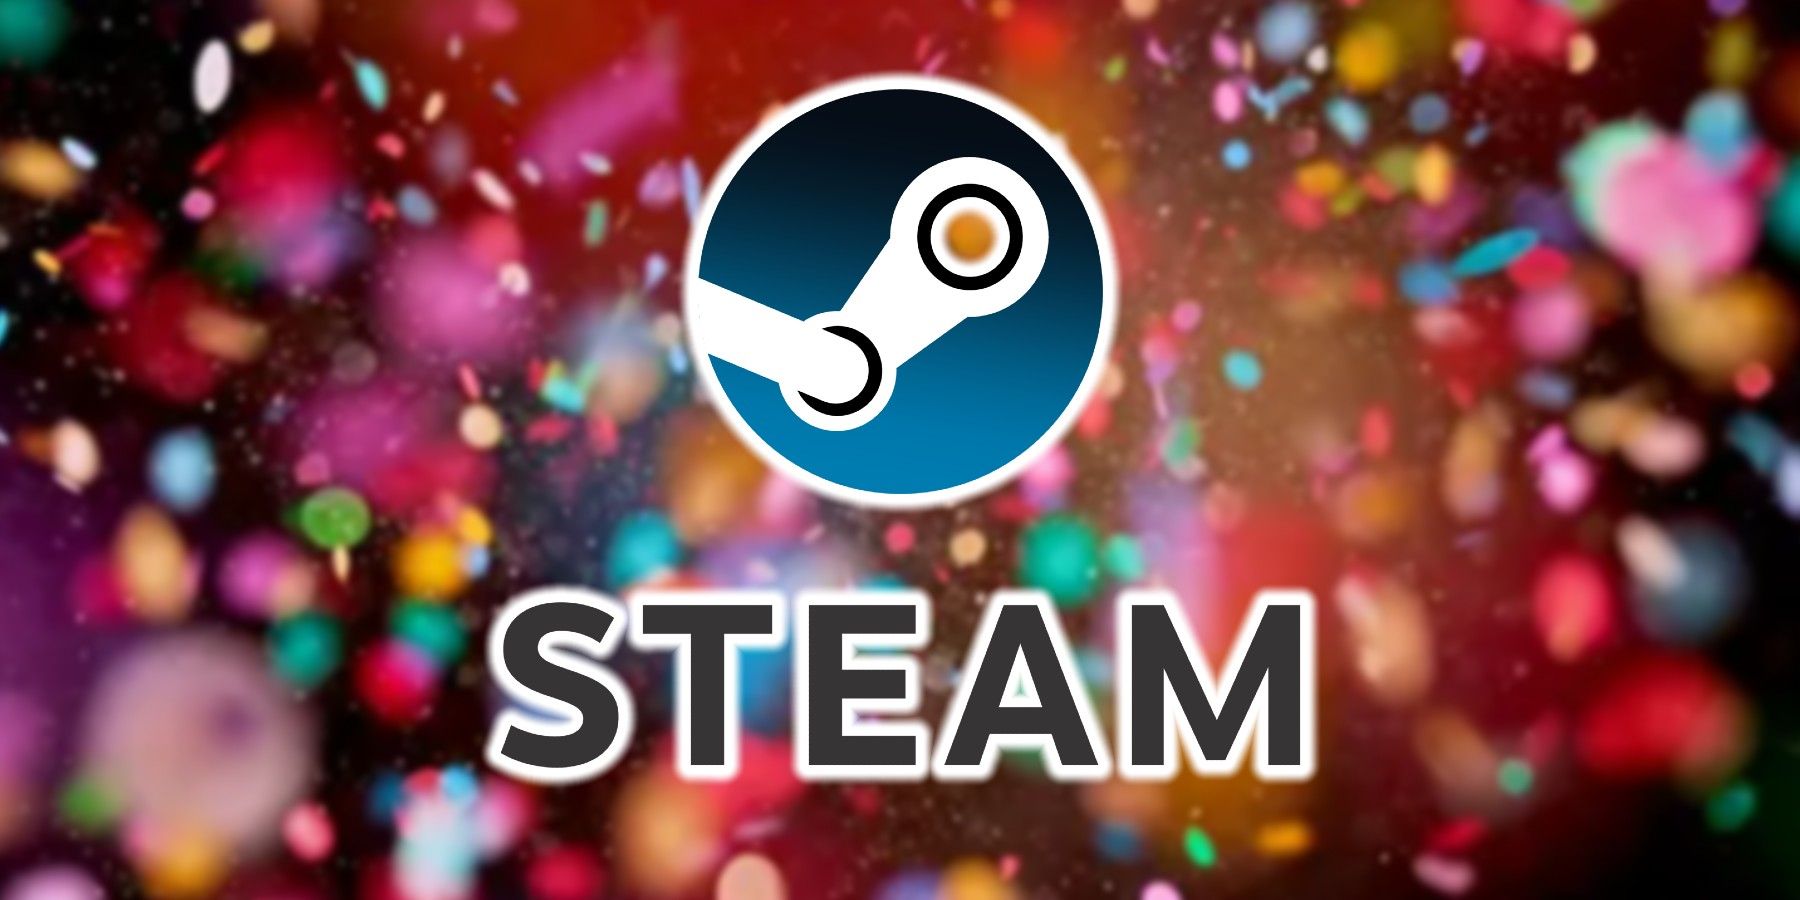 steam-logo-blurred-celebration-background